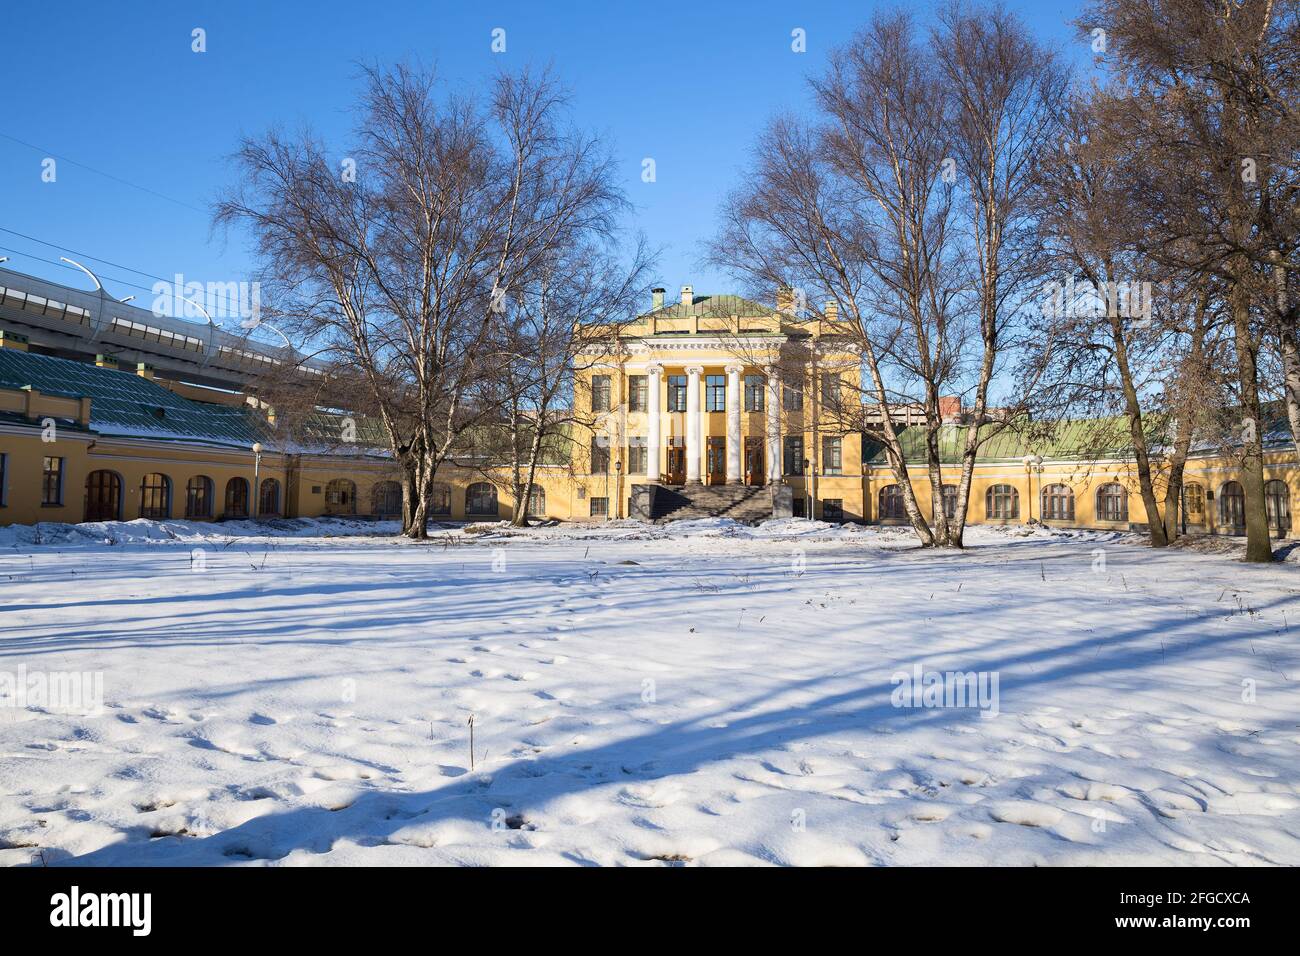 Kiryanovo estate, the dacha of Princess Vorontsova-Dashkova, has the shape of a horseshoe, built in 1783. St. Petersburg, Russia Stock Photo